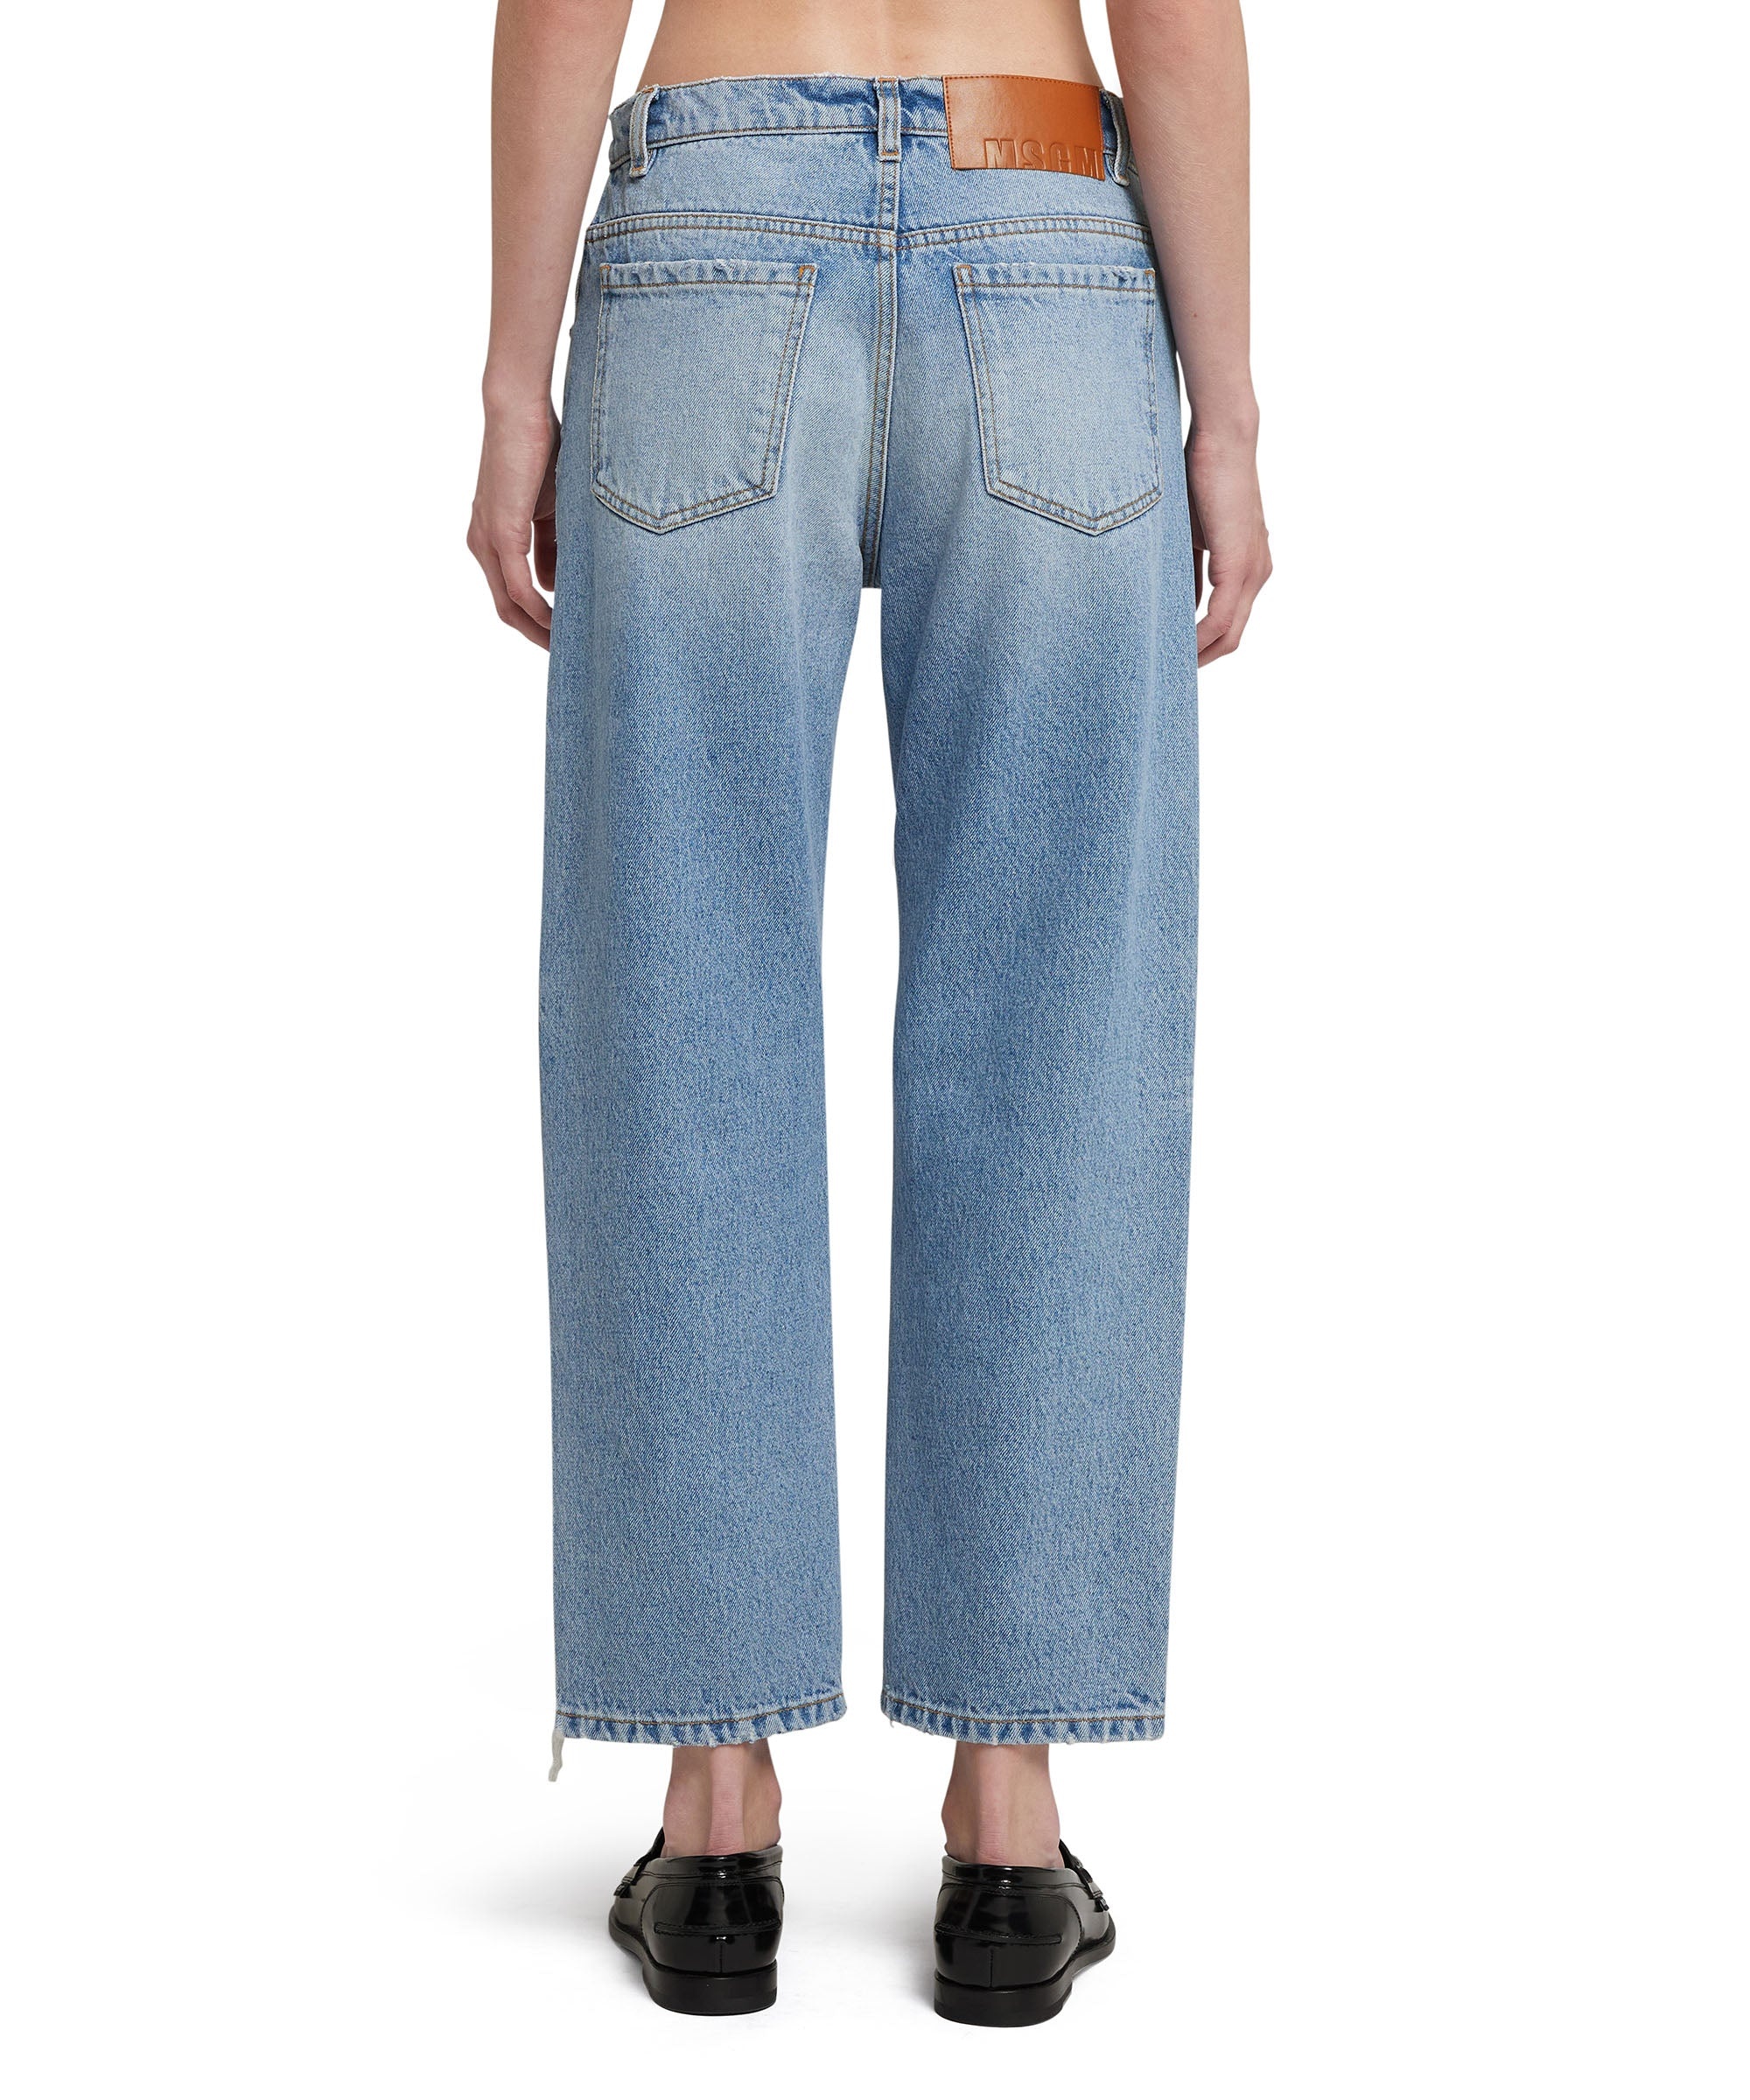 Blue denim pants wih 5 pockets and daisy rhinestone application - 3